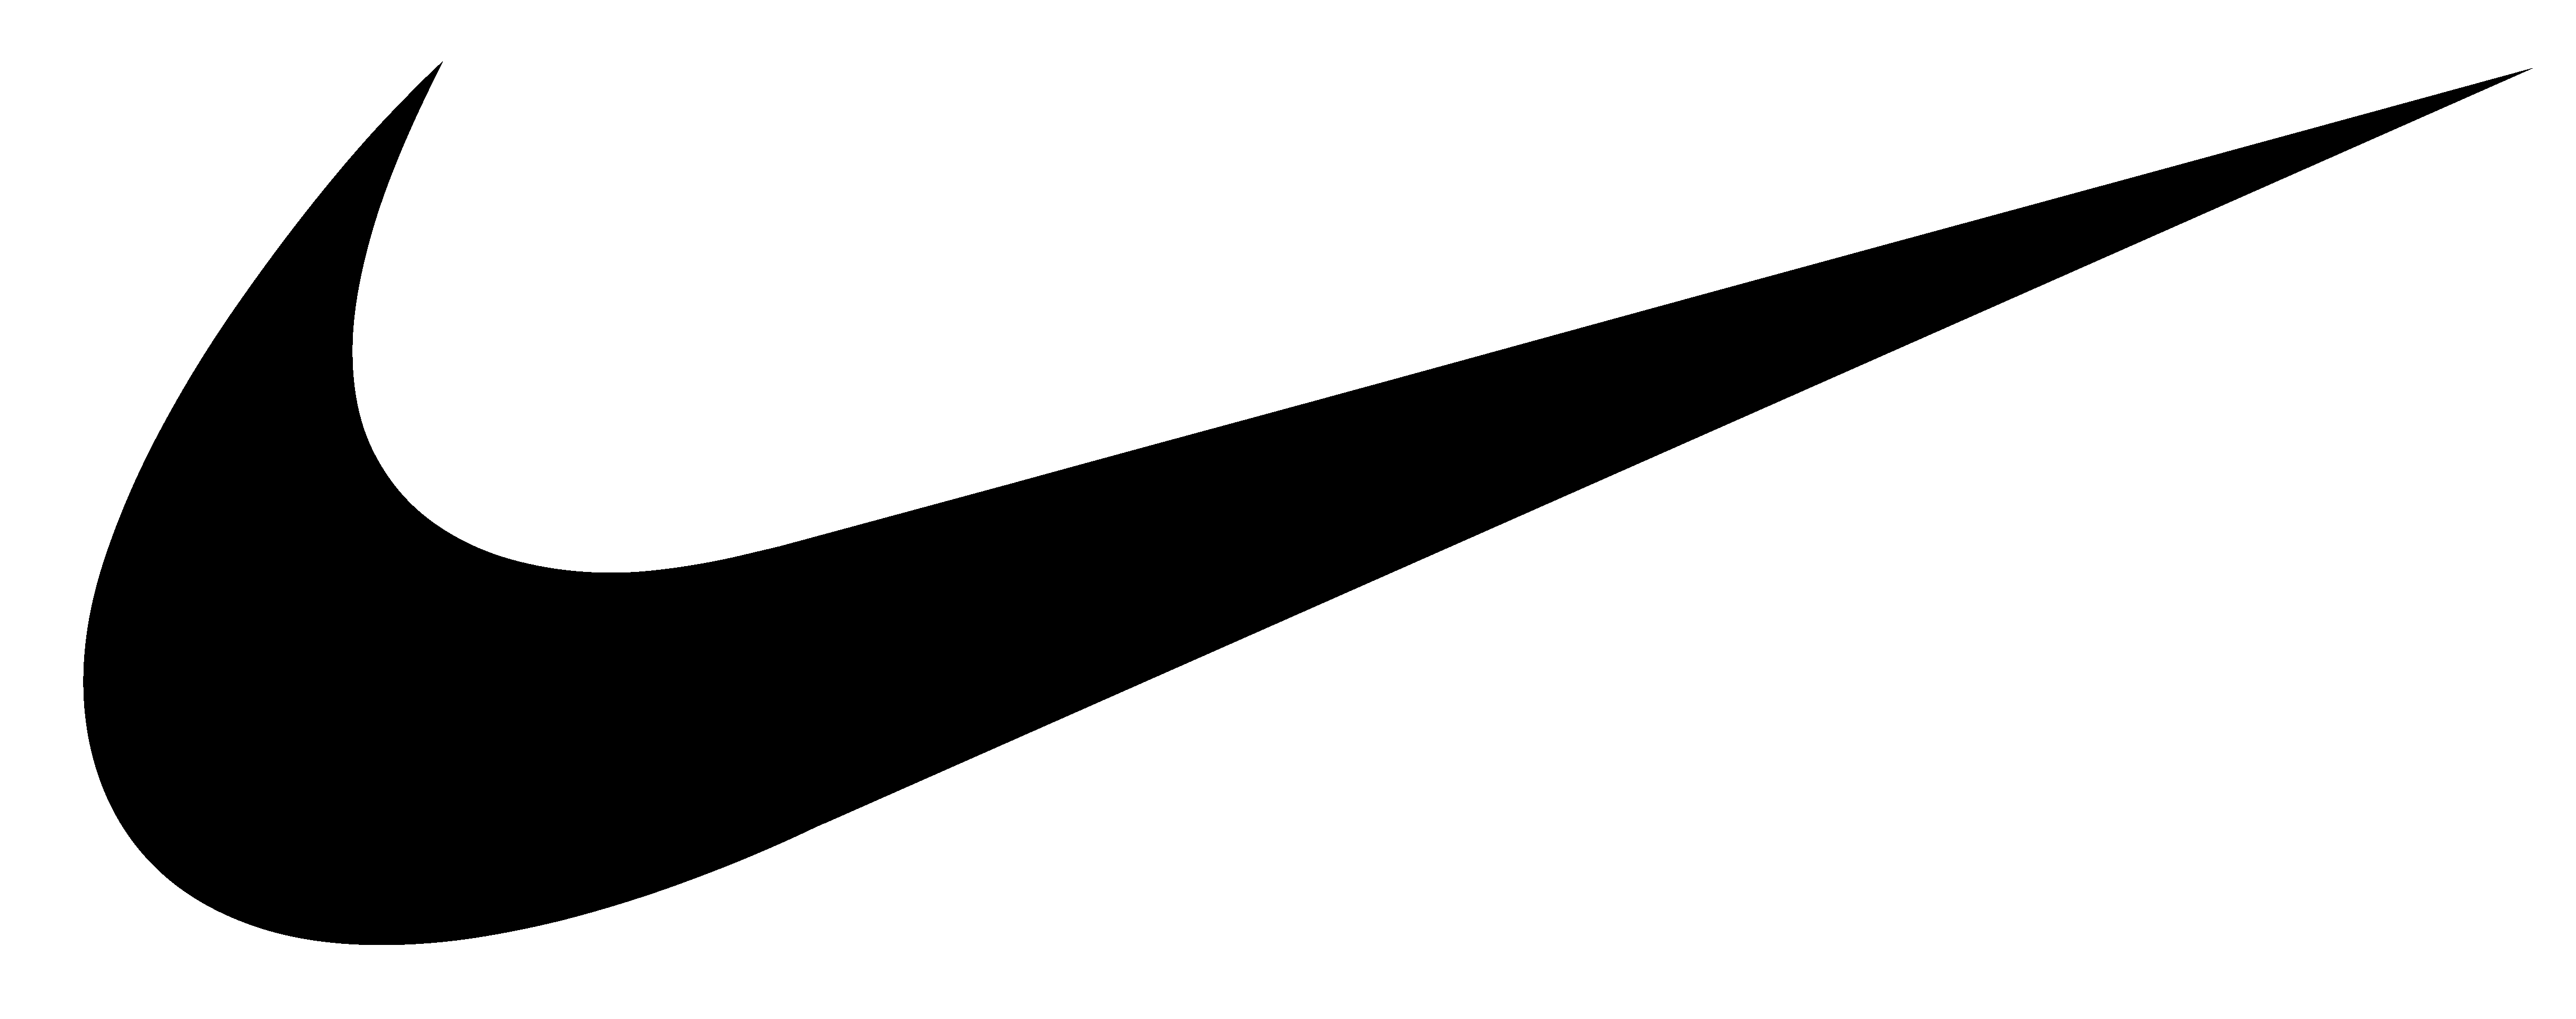 kisspng swoosh nike logo logo element 5b5321e3a3a0f6.9431604115321748196702